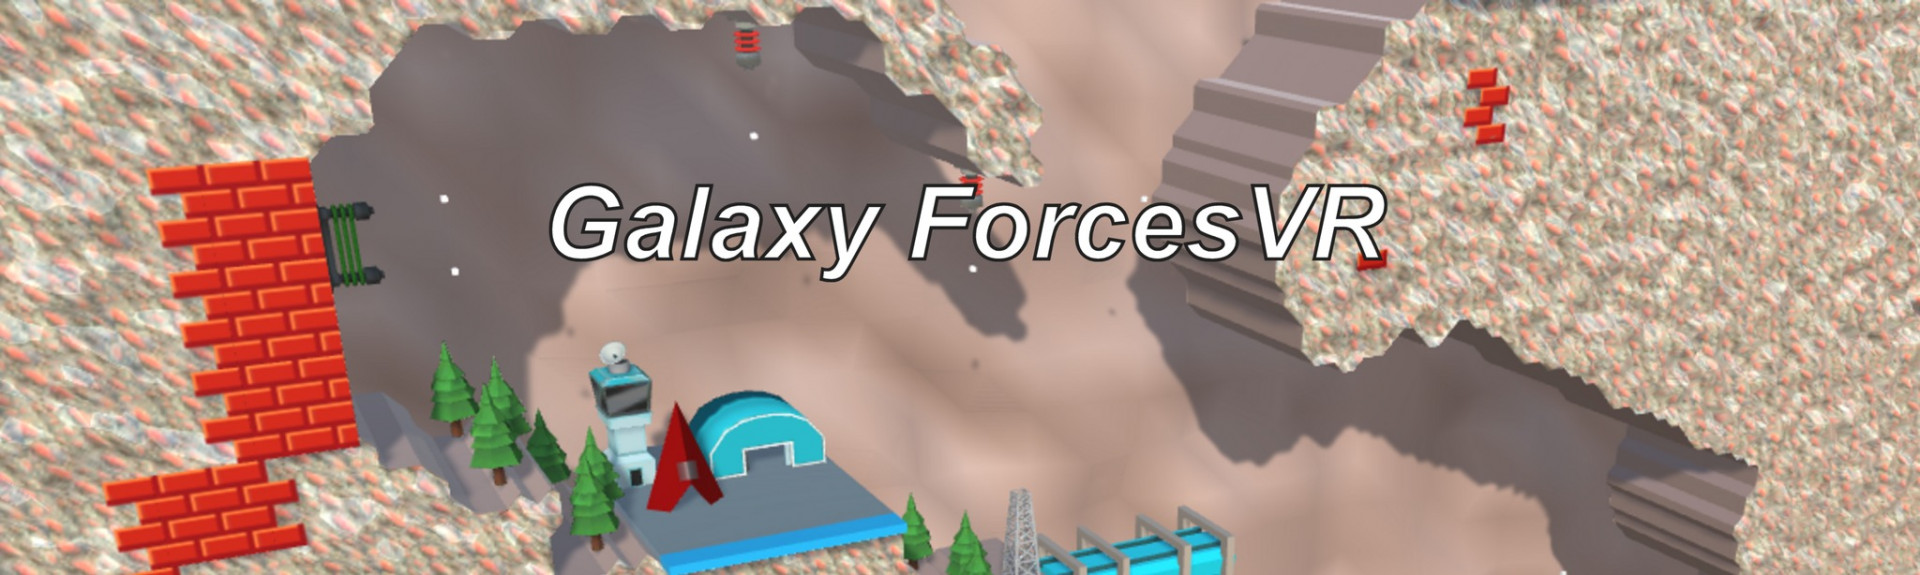 Galaxy Forces VR